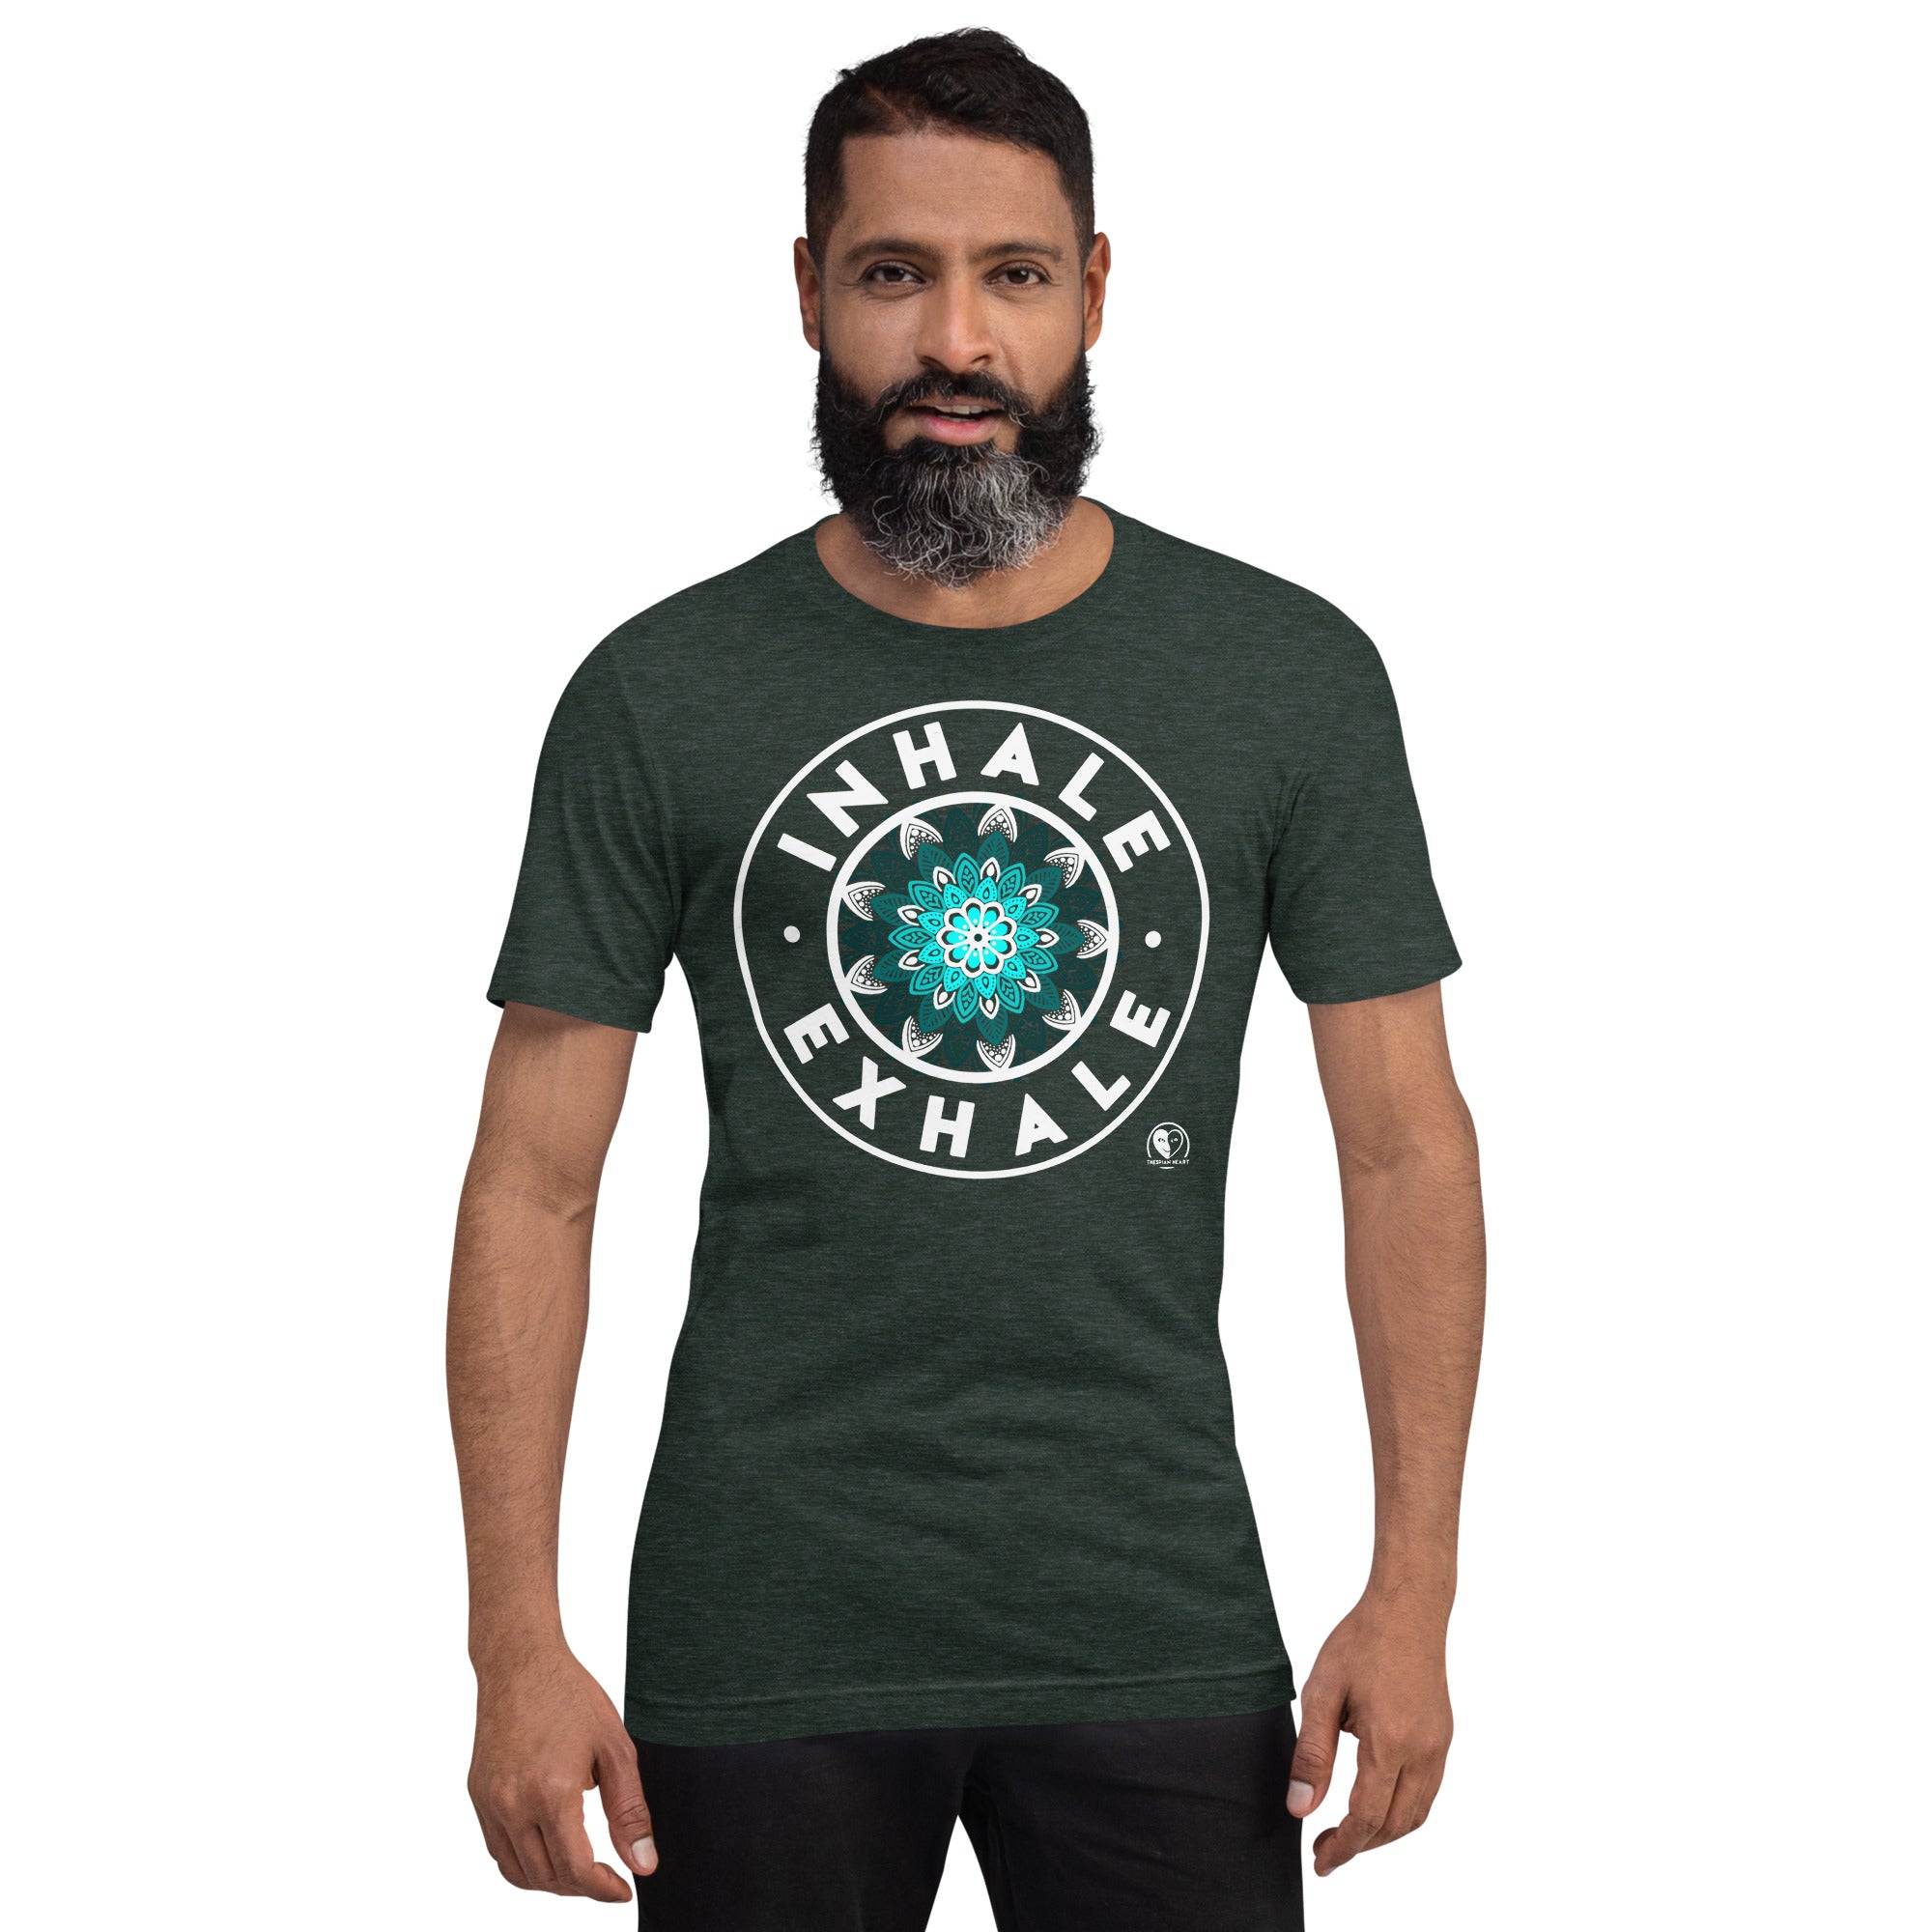 Inhale Exhale - Short-Sleeve Staple Unisex T-shirt